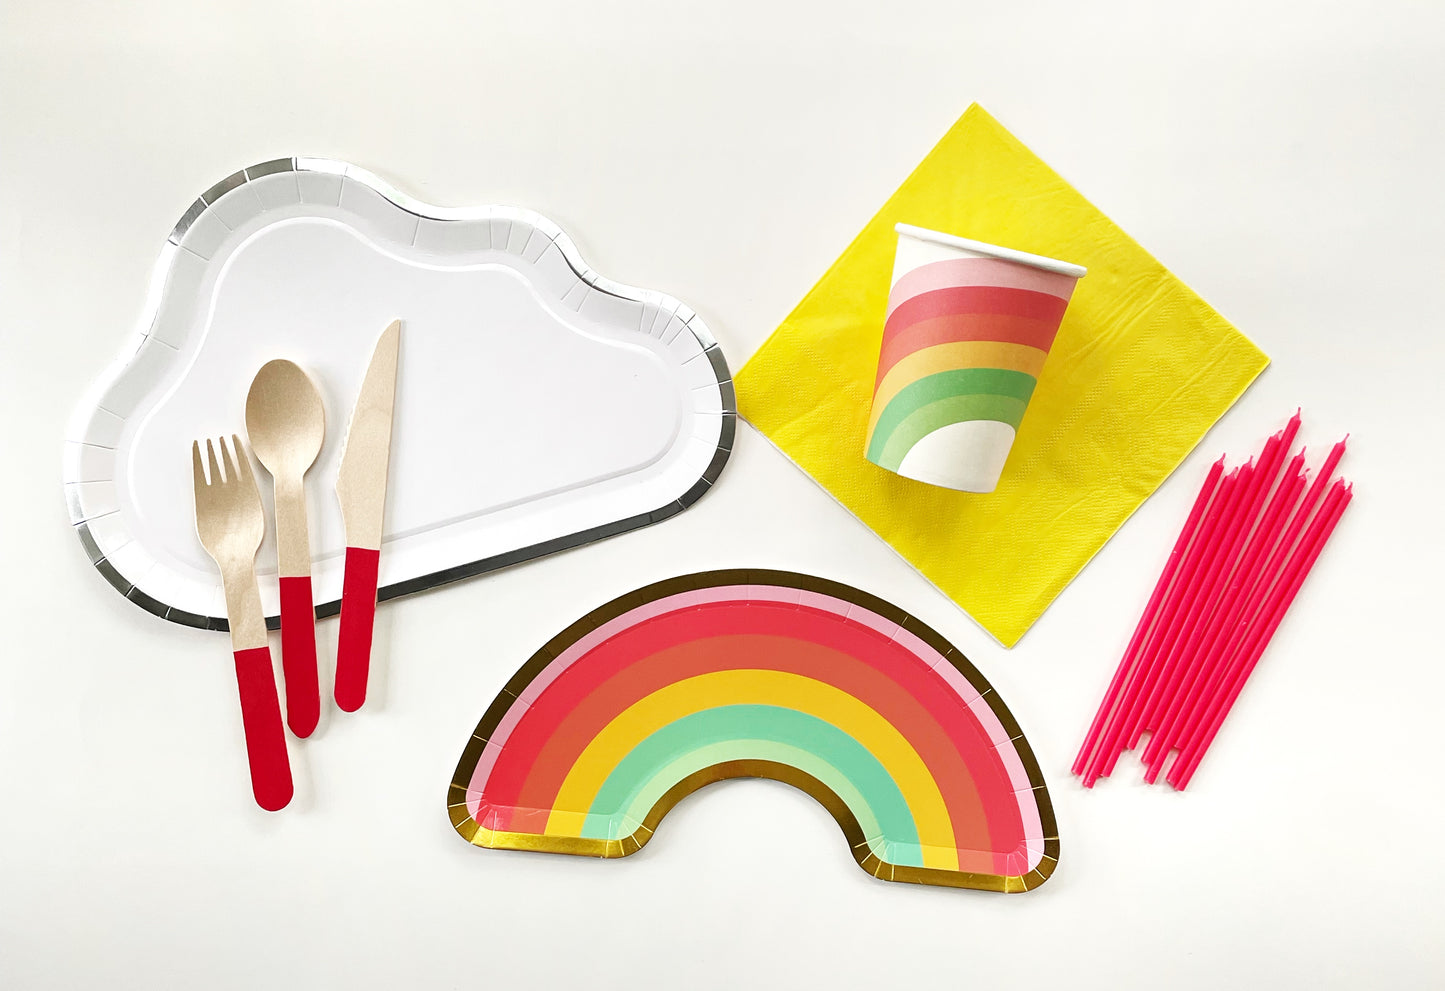 The Rainbow Party Kit